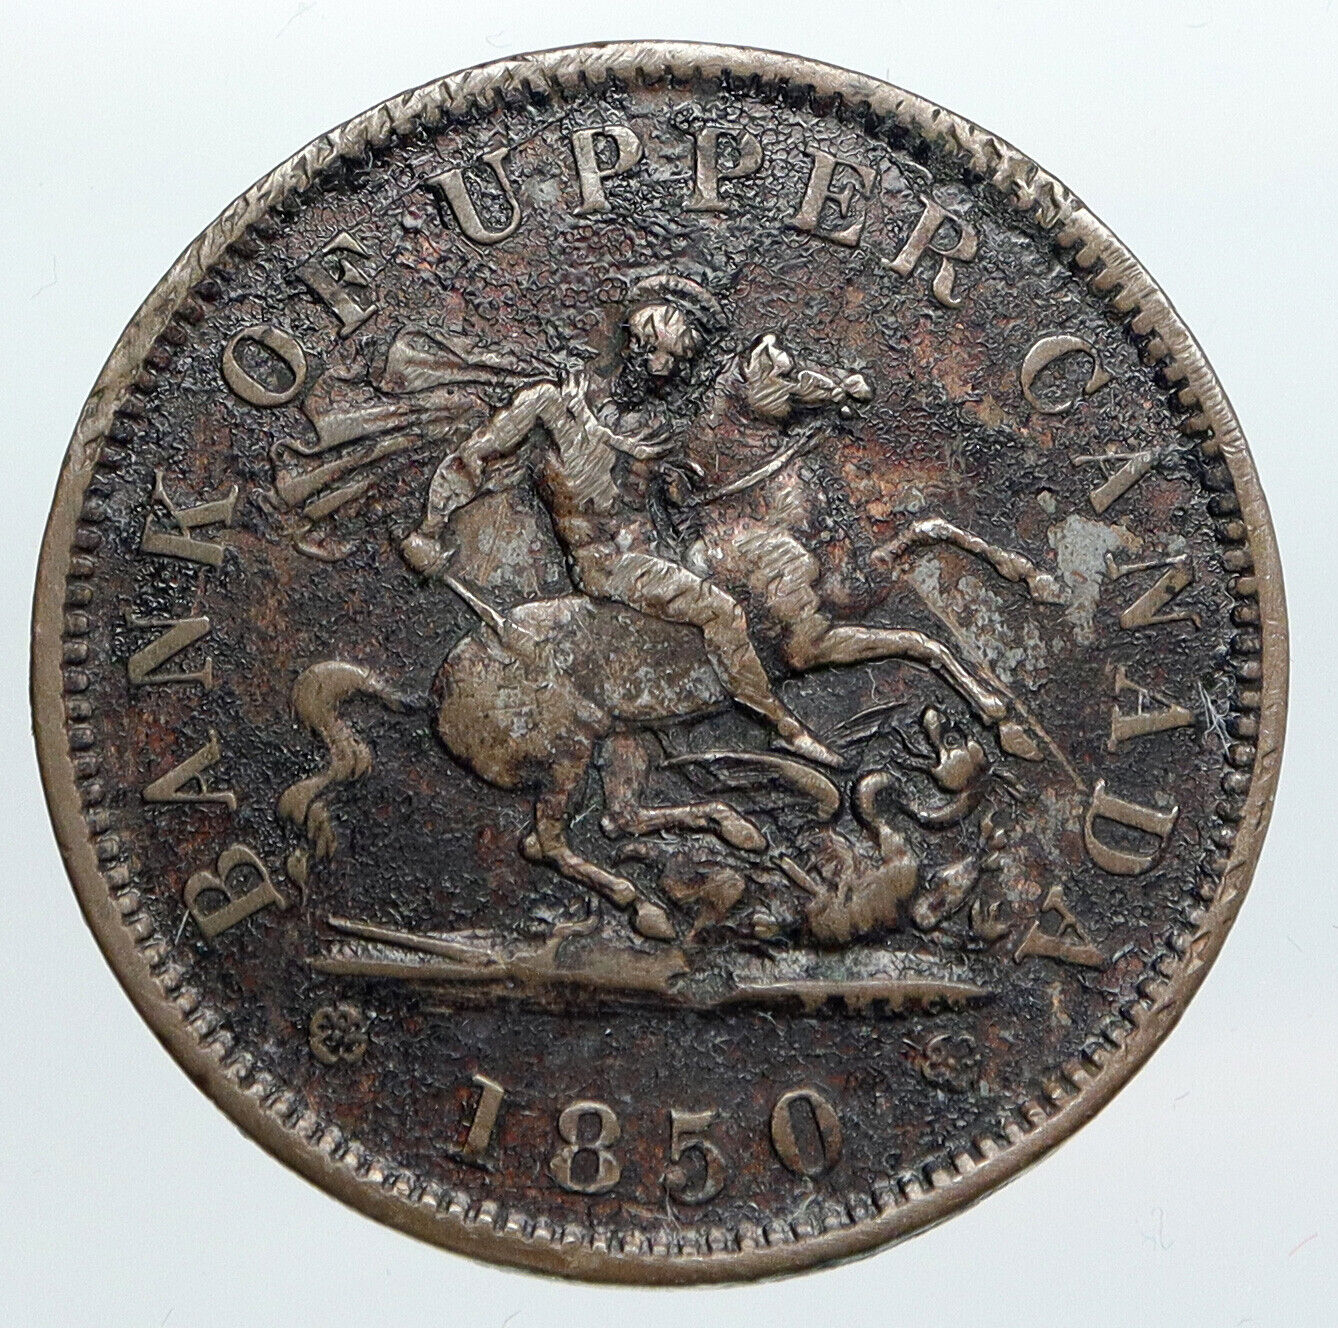 1850 UPPER CANADA Antique UK Queen Victoria Time PENNY BANK TOKEN Coin i90545